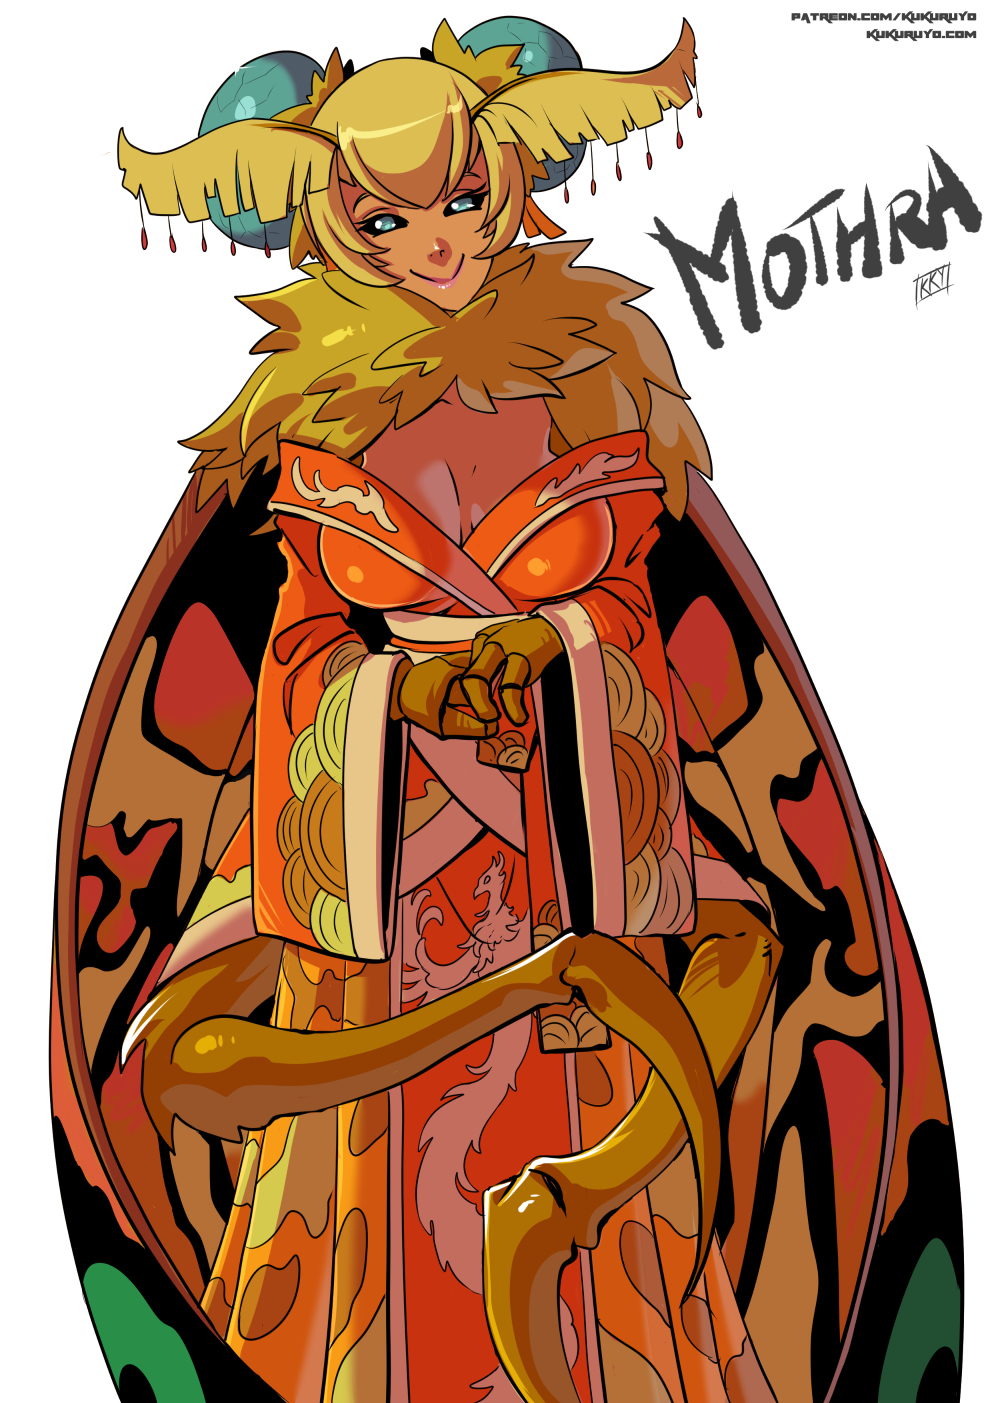 Mothra Monster Girl By Kukuruyoart On Deviantart